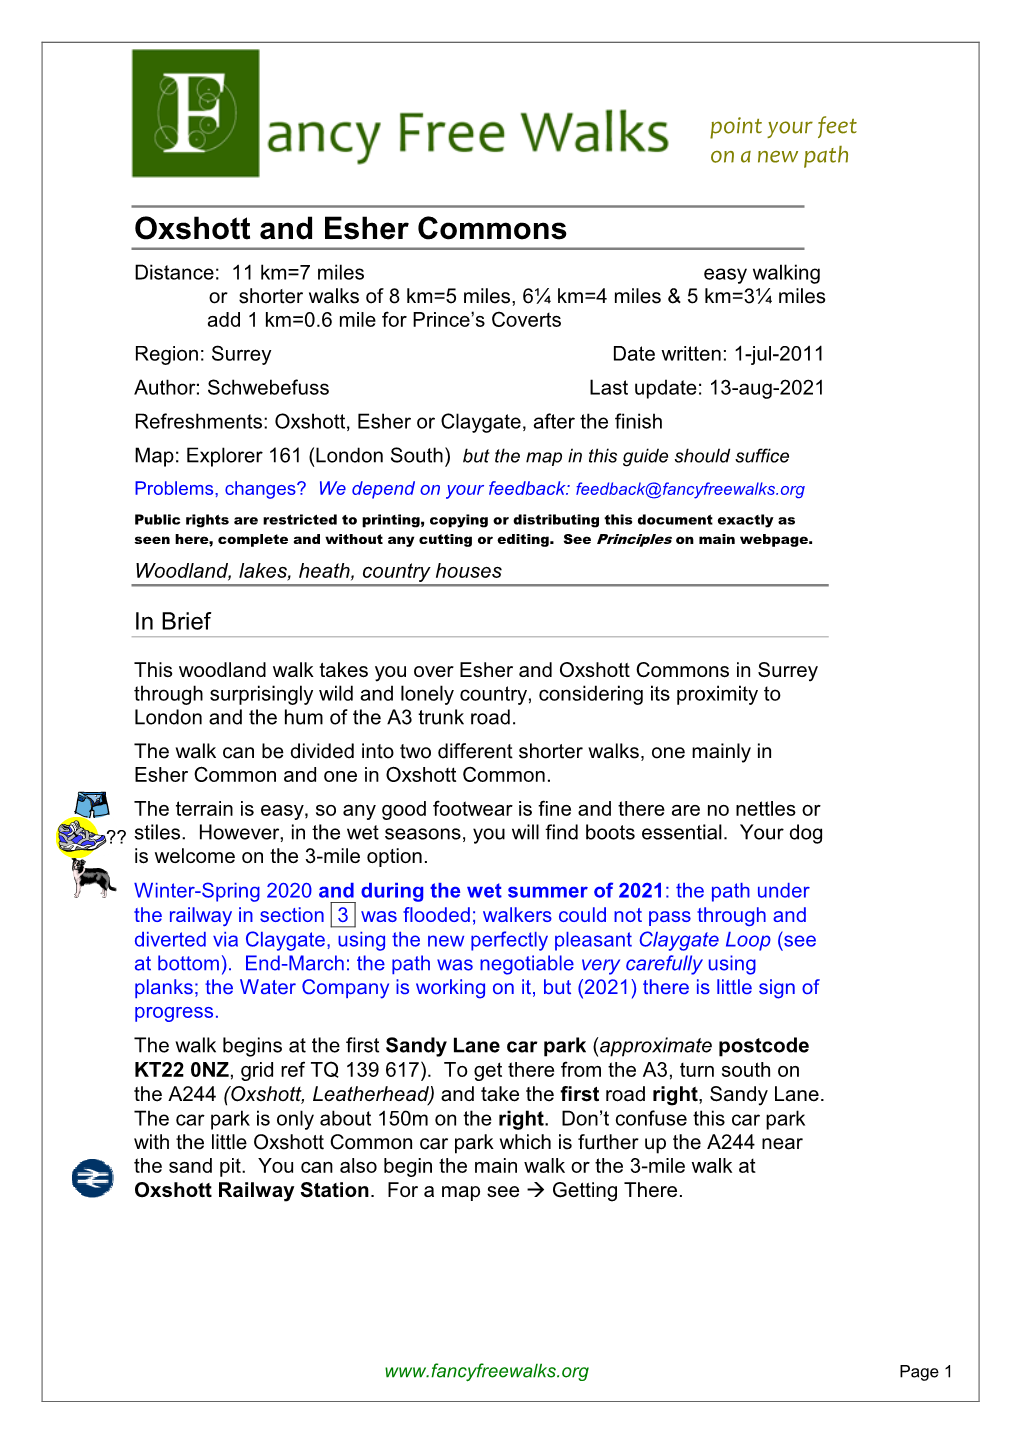 Oxshott & Esher Commons